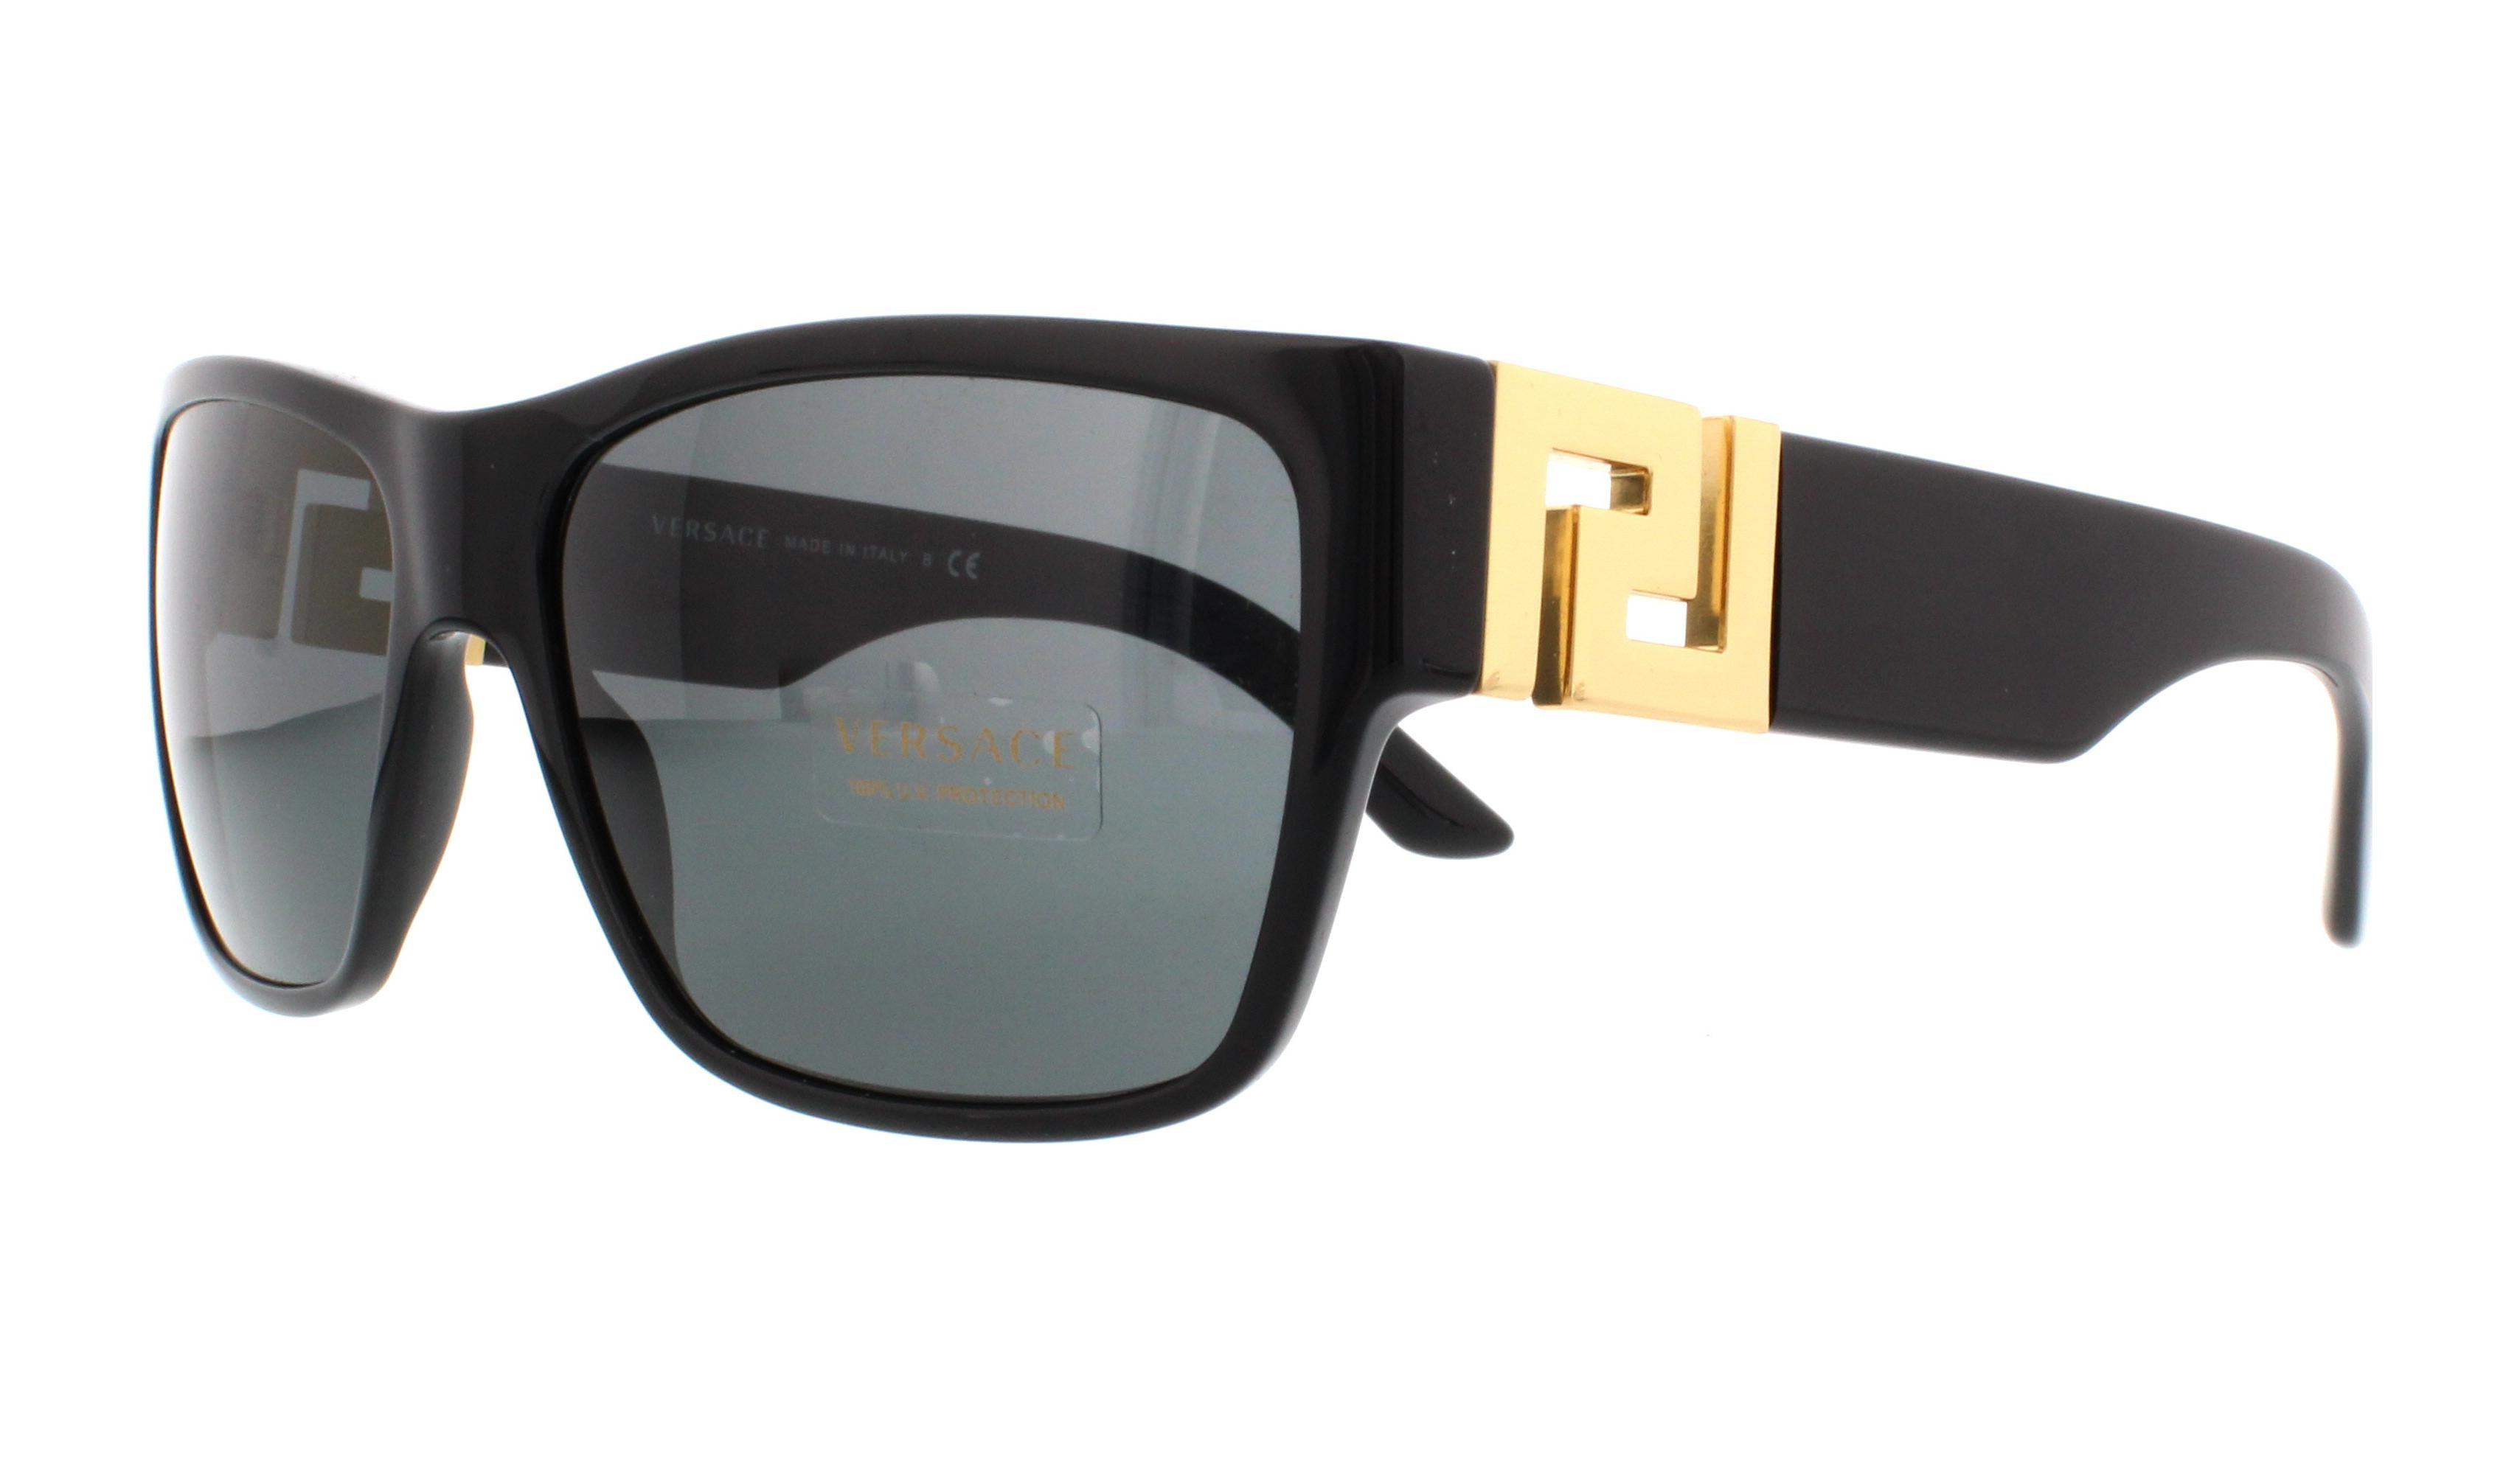 versace sunglasses ve4296